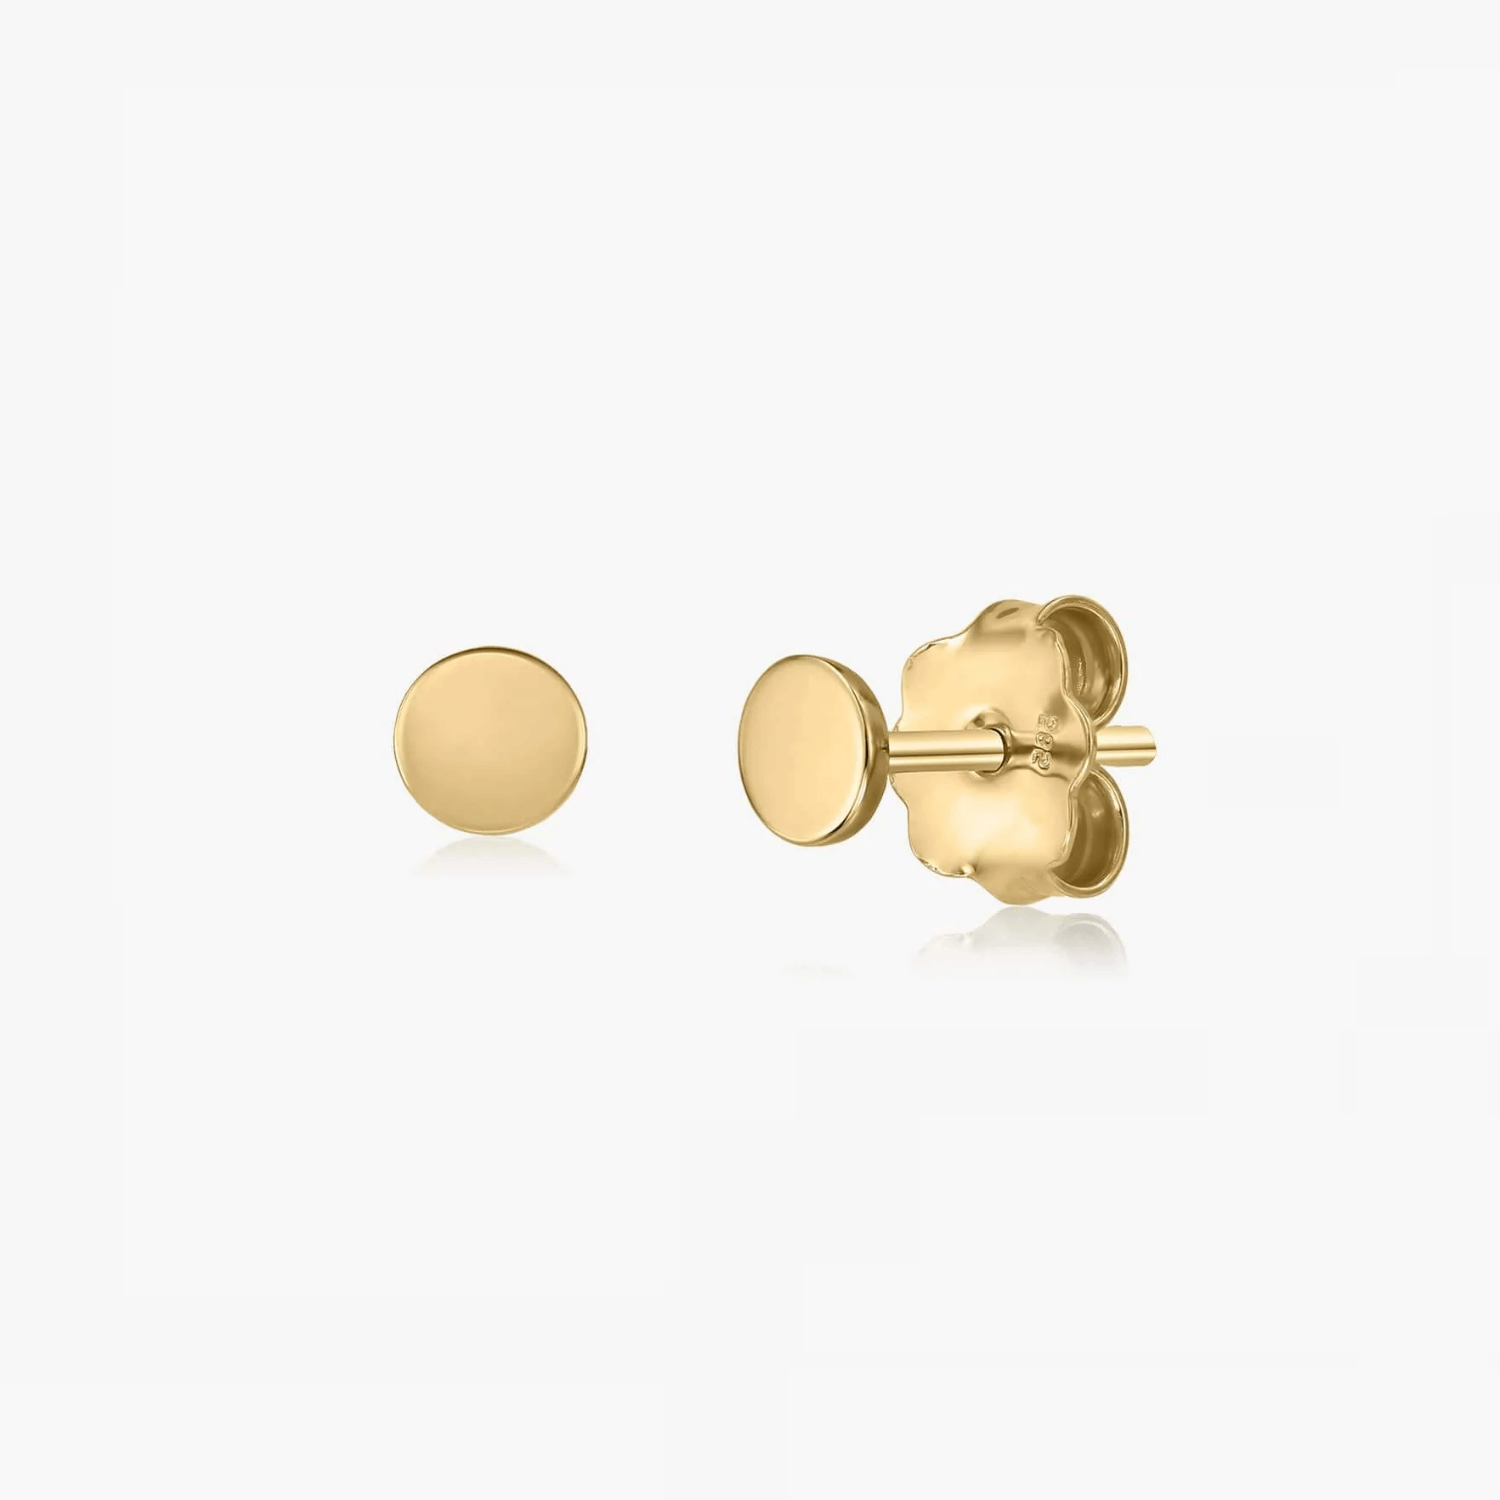 Gold Button earrings